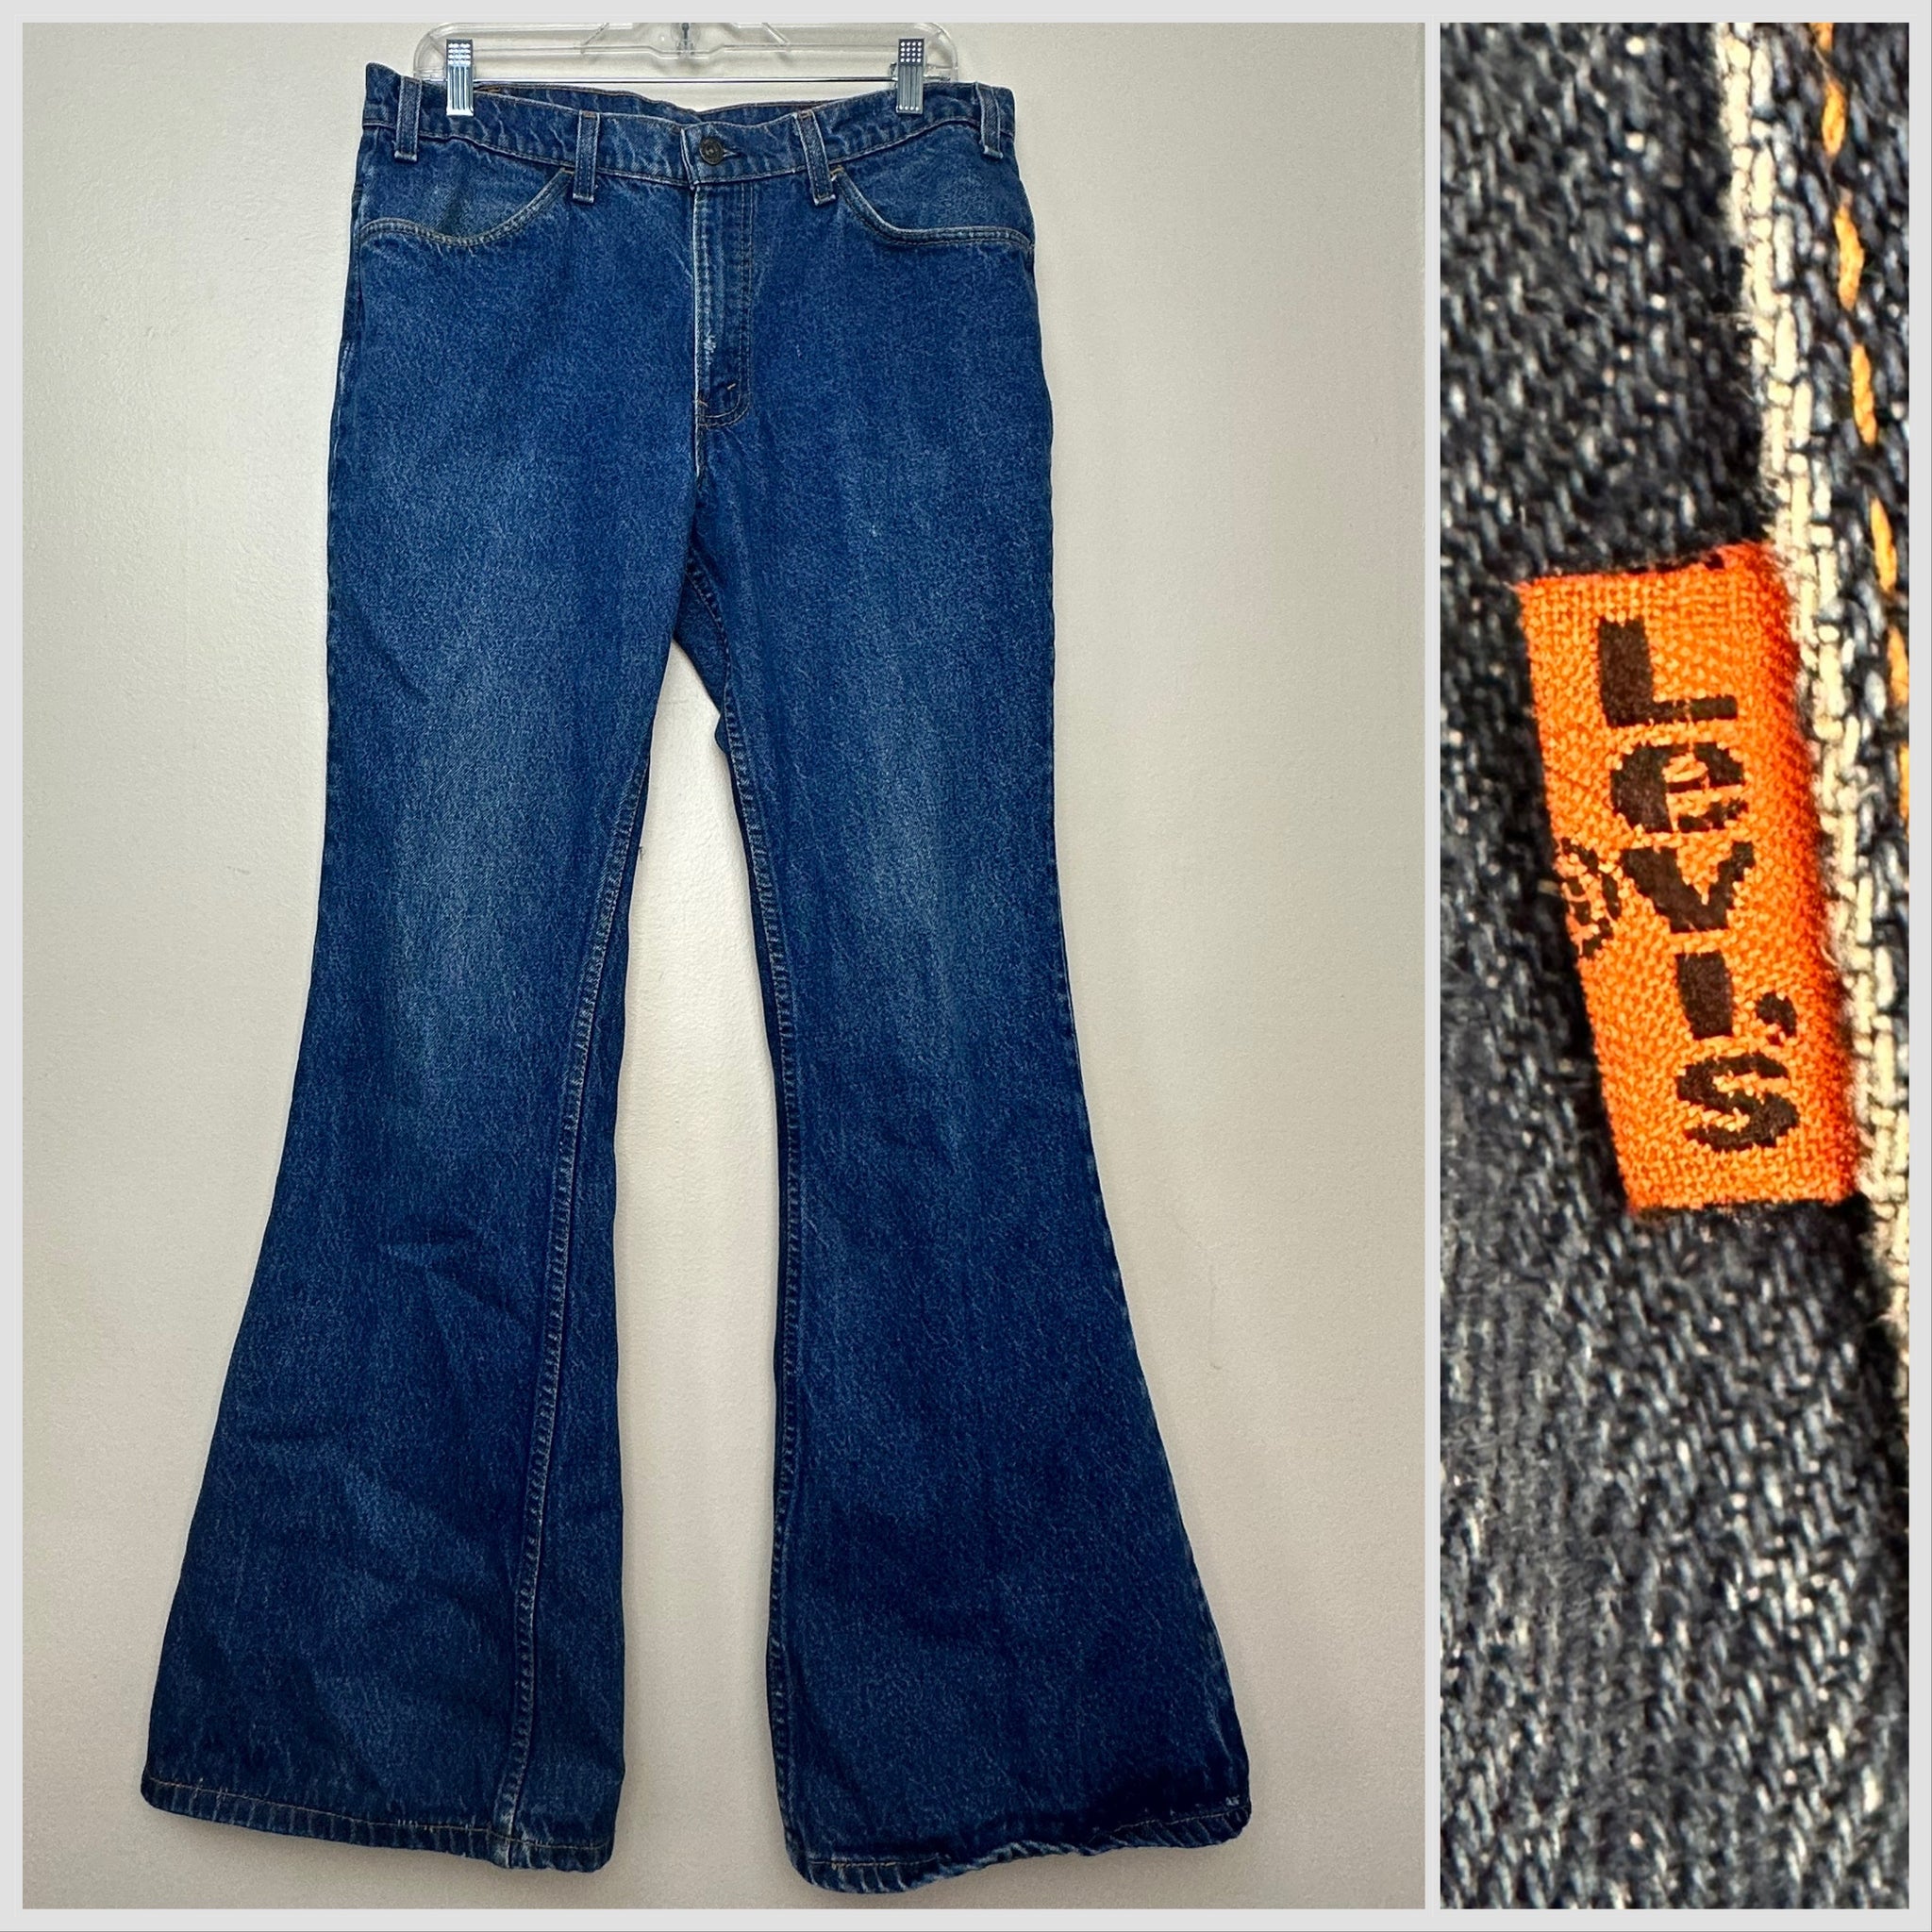 1980s Levi's Bell Bottom Jeans, 684 Orange Tab Blue Denim, 34x32.5